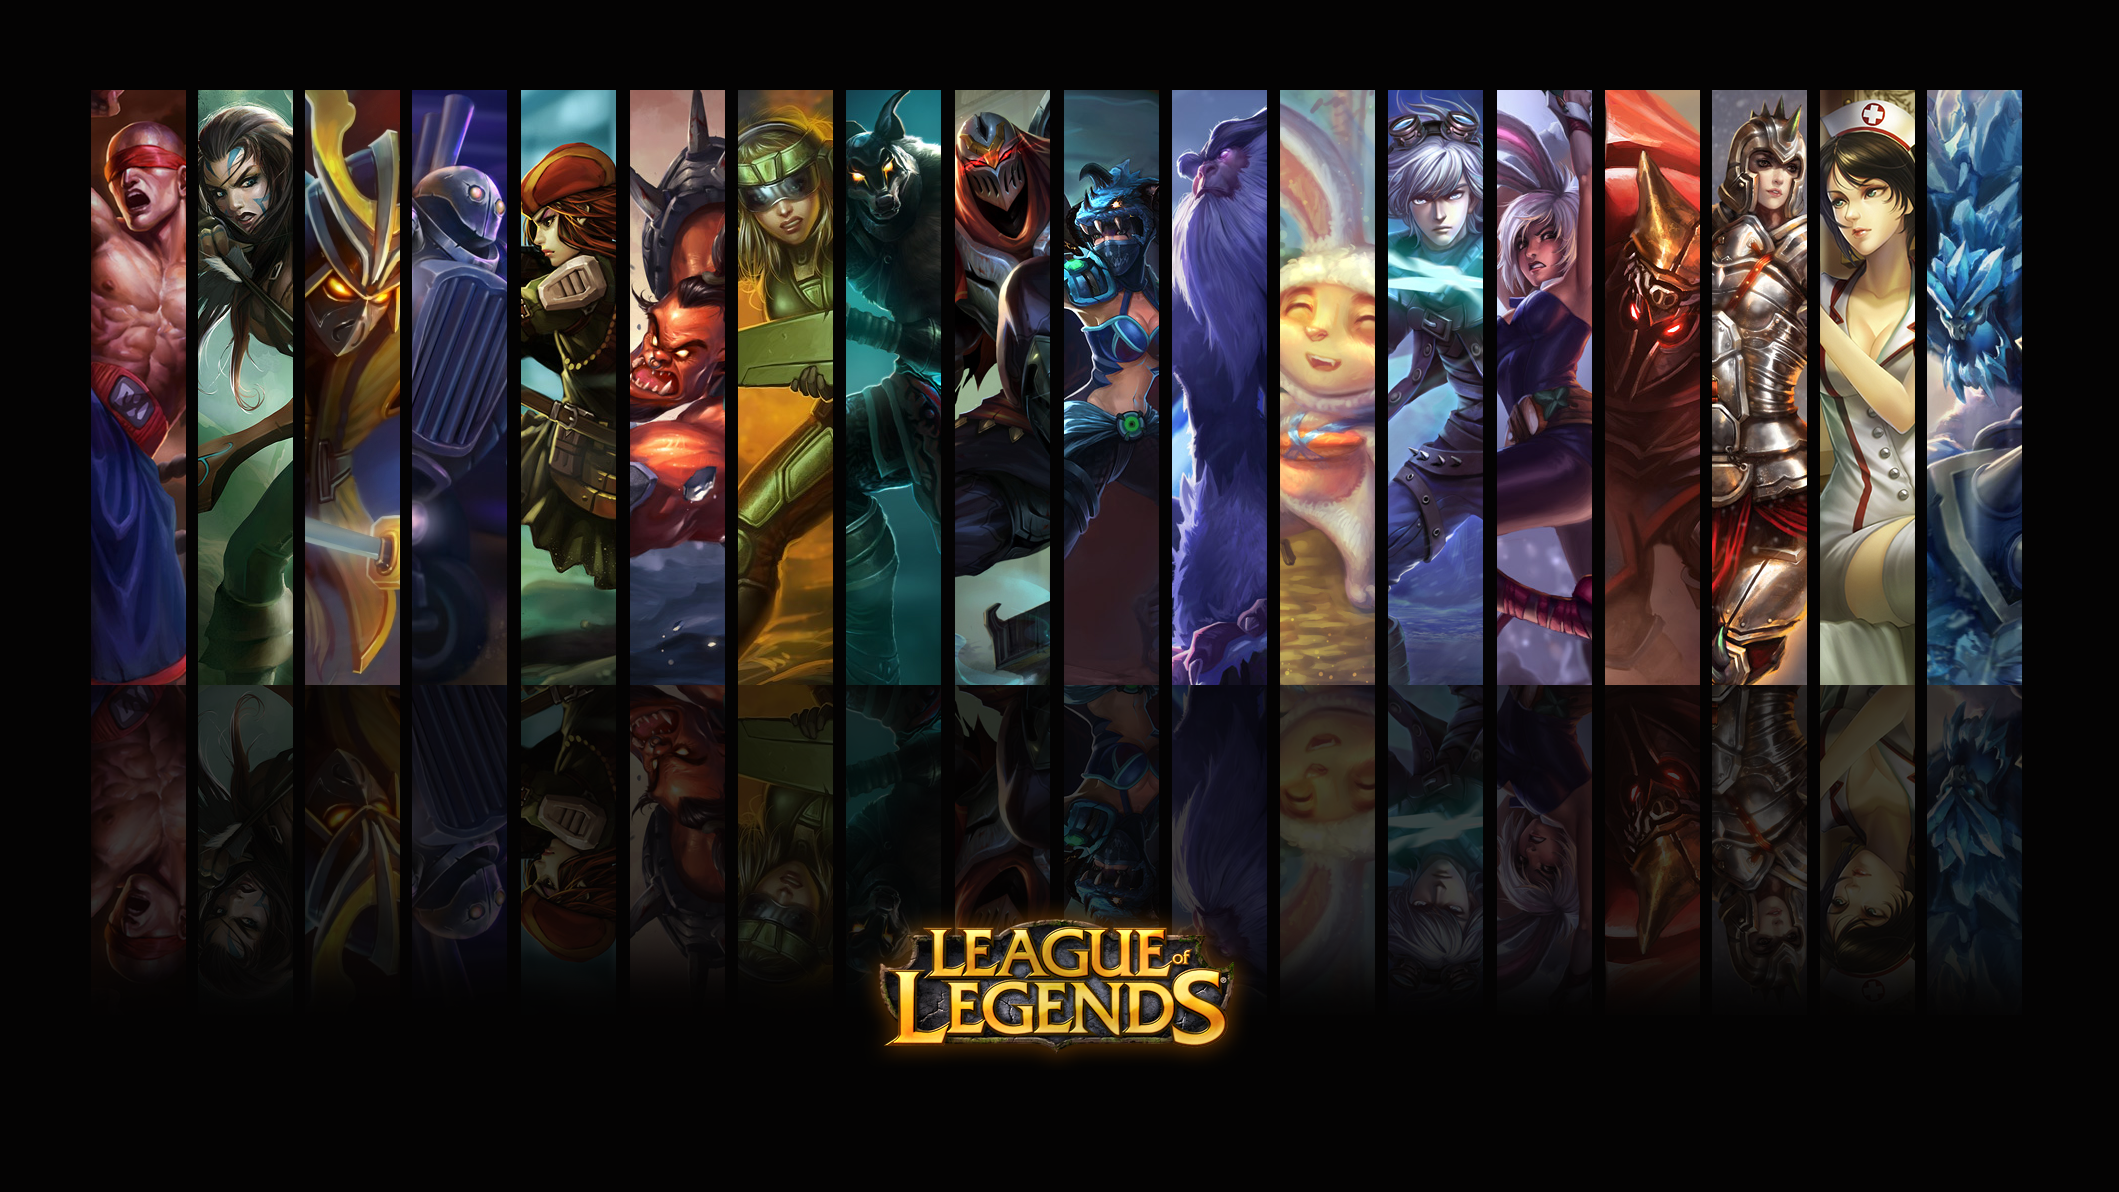 League of Legends Wallpaper/Panel Art by Wishlah on DeviantArt